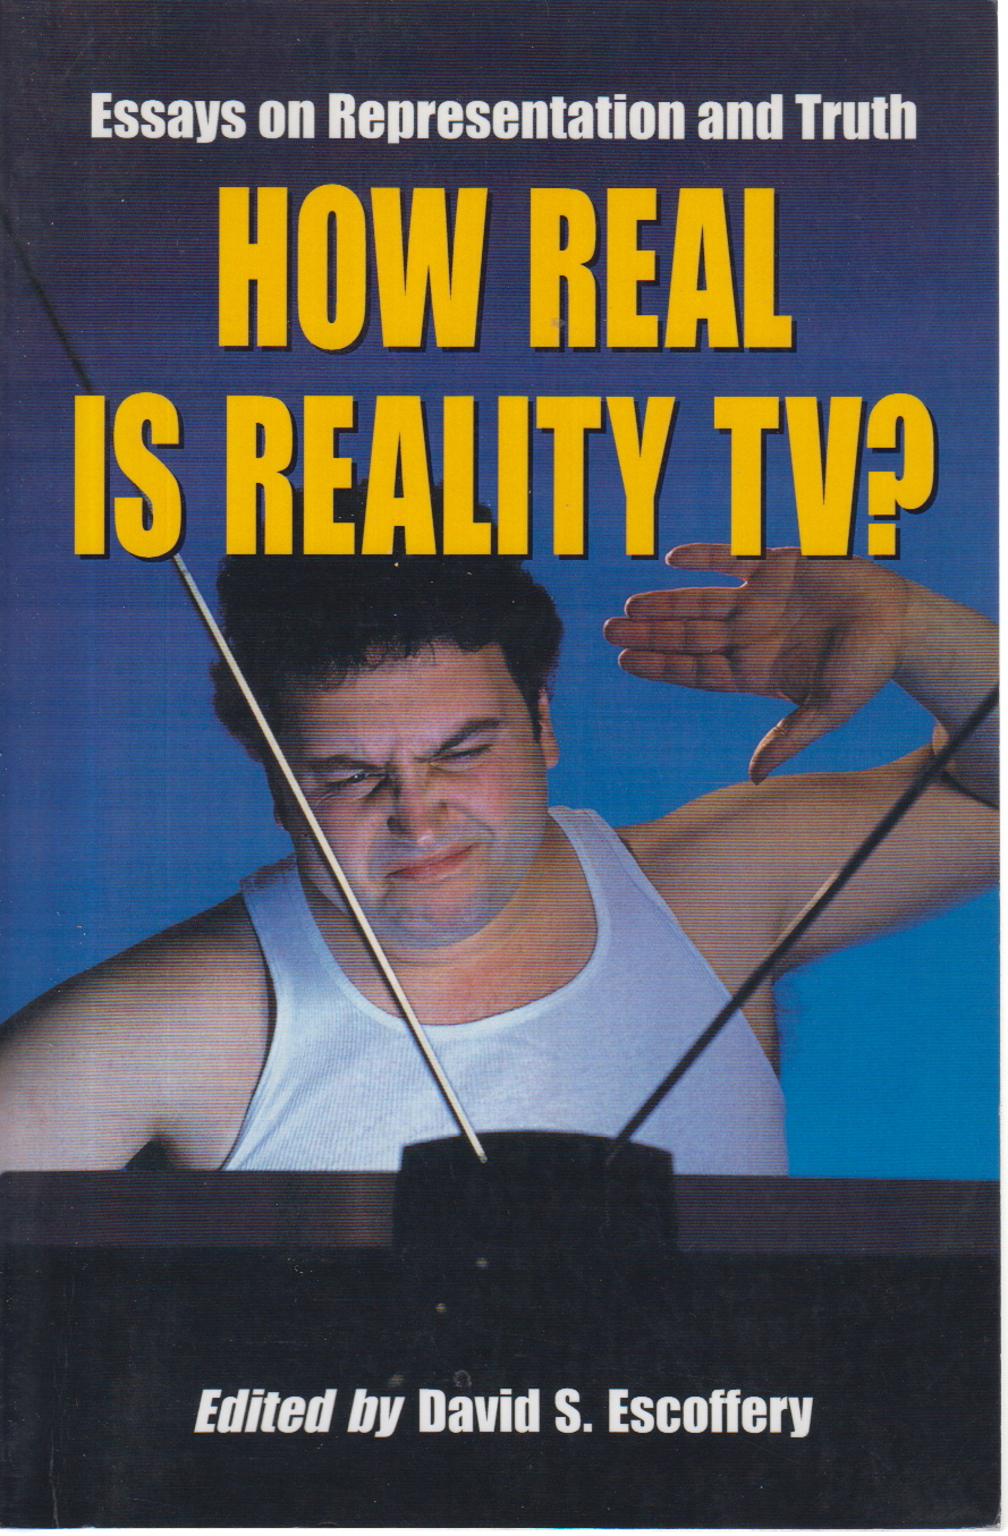 How real is reality TV?, David. S. Escoffery